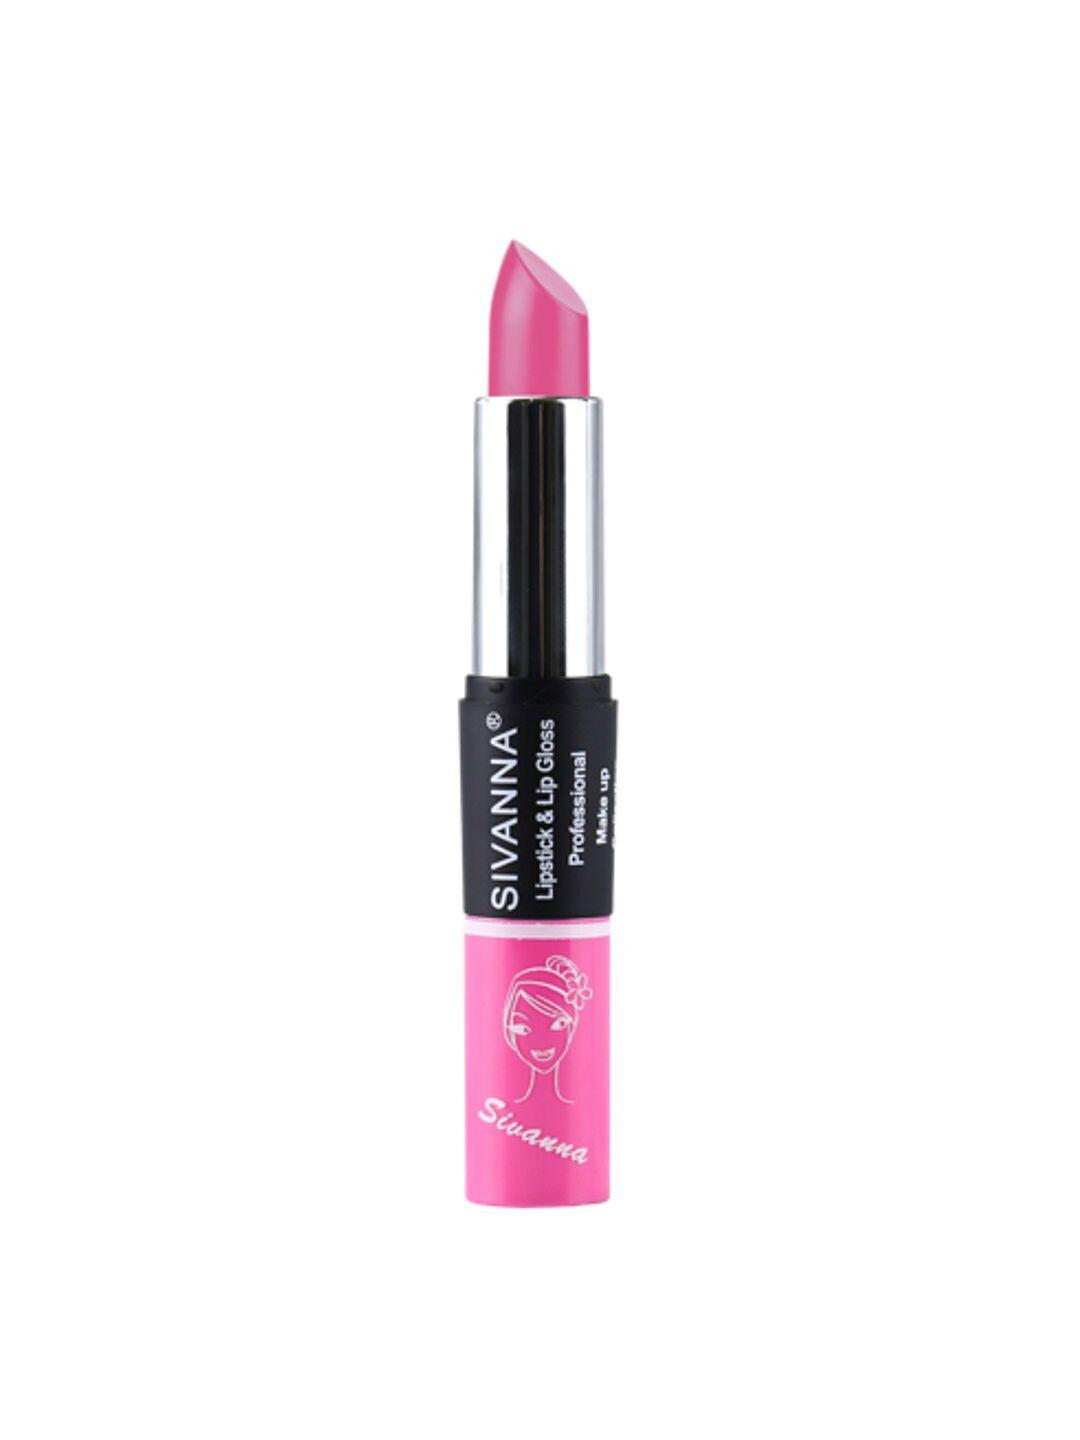 sivanna colors 2-in-1 professional makeup lipstick & lip gloss - dk061 04